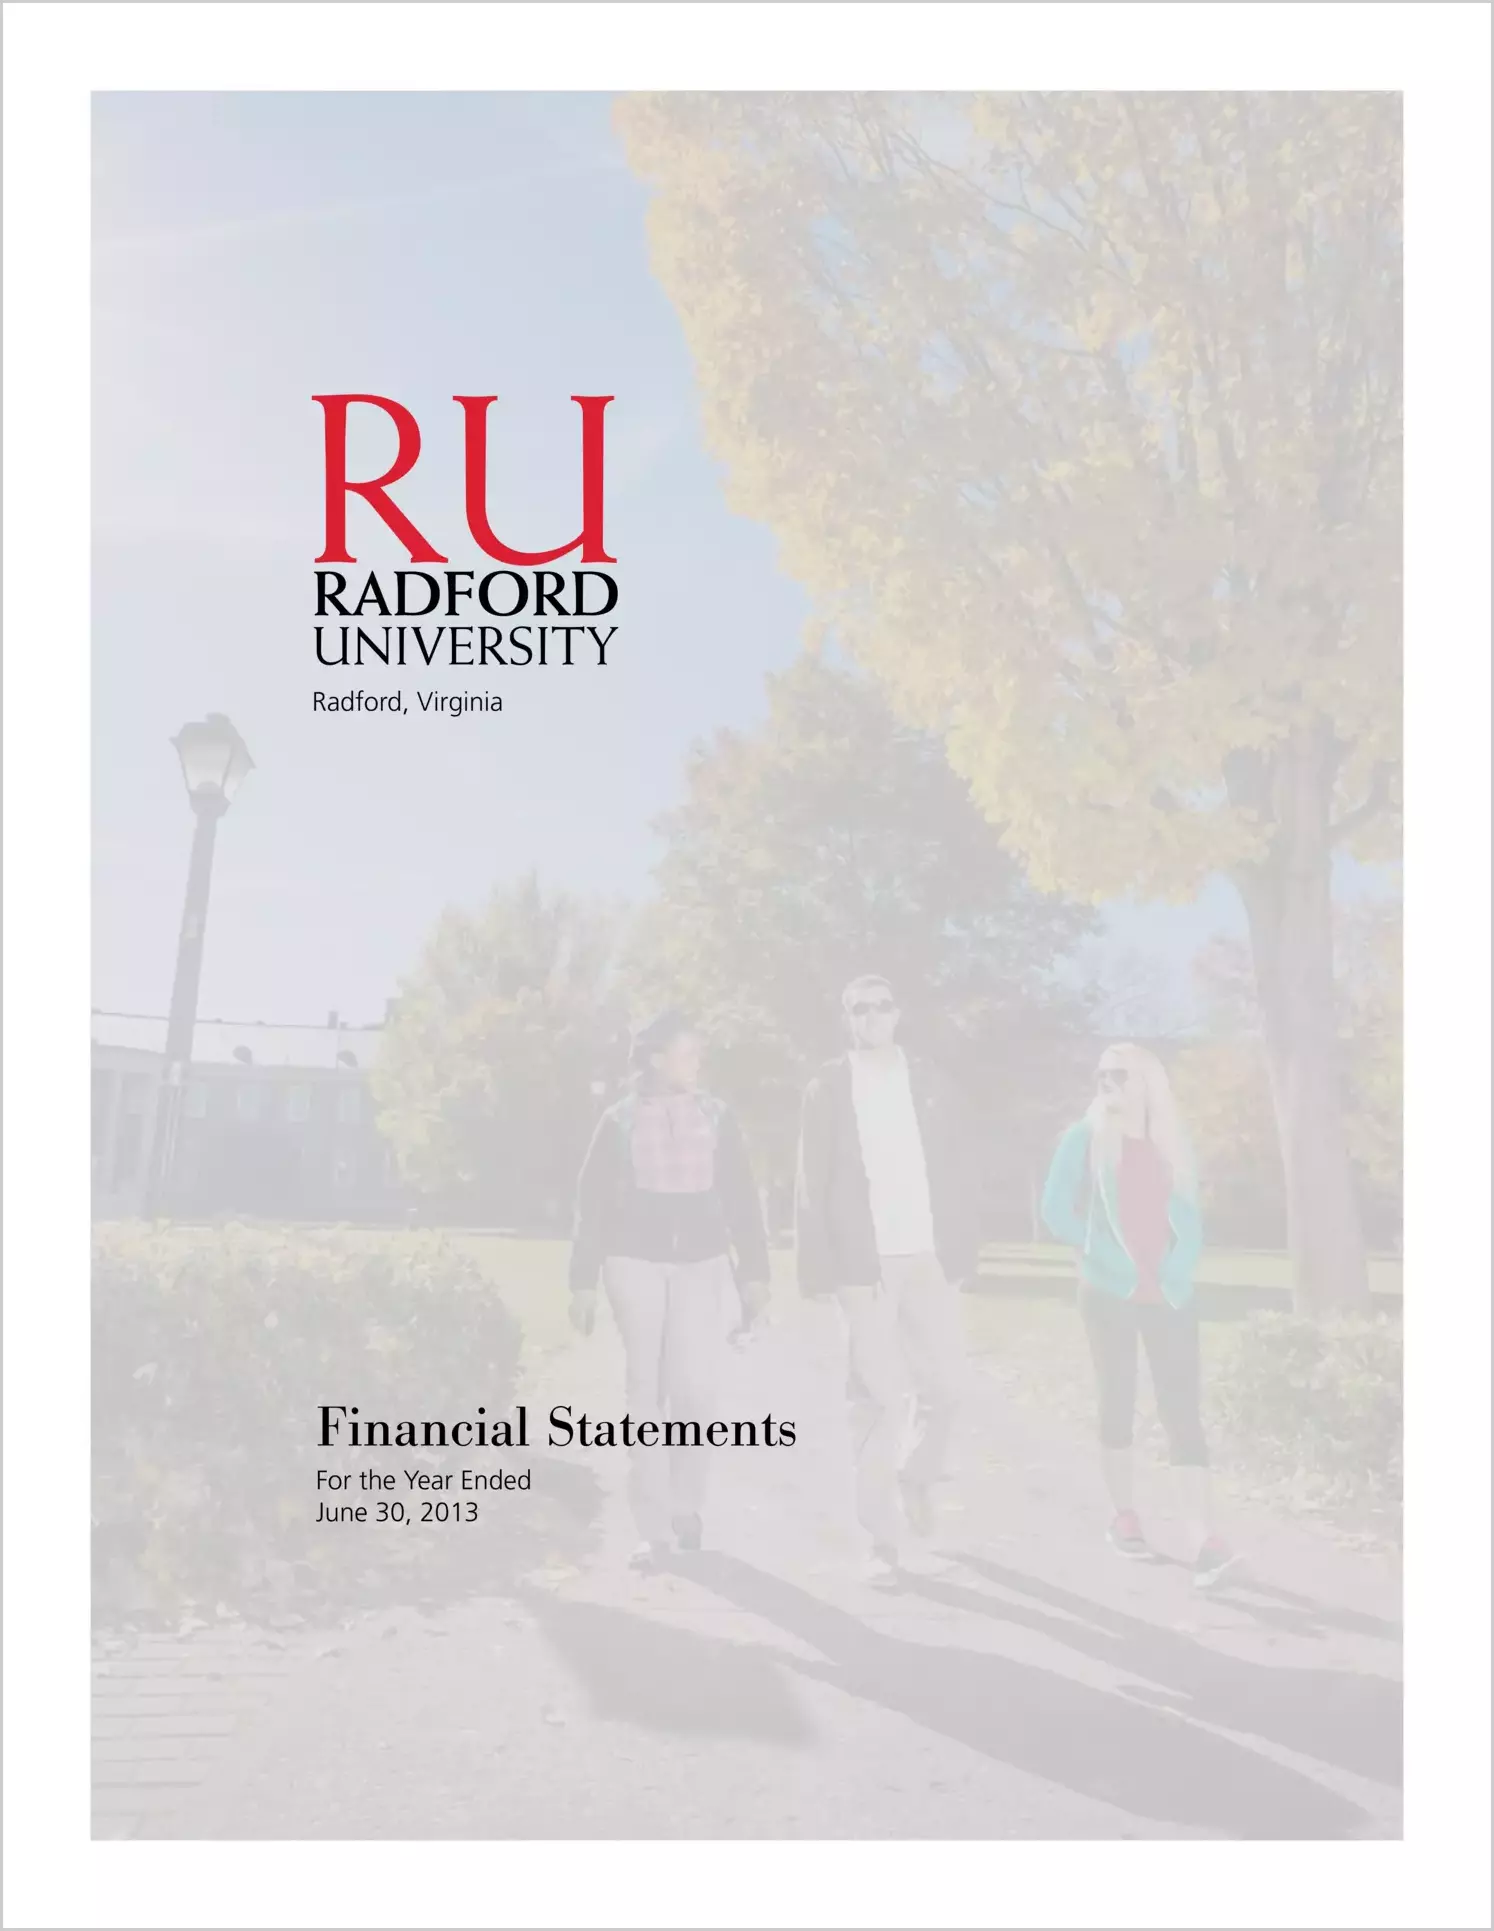 Radford University Financial Statement for year ending June 30, 2013